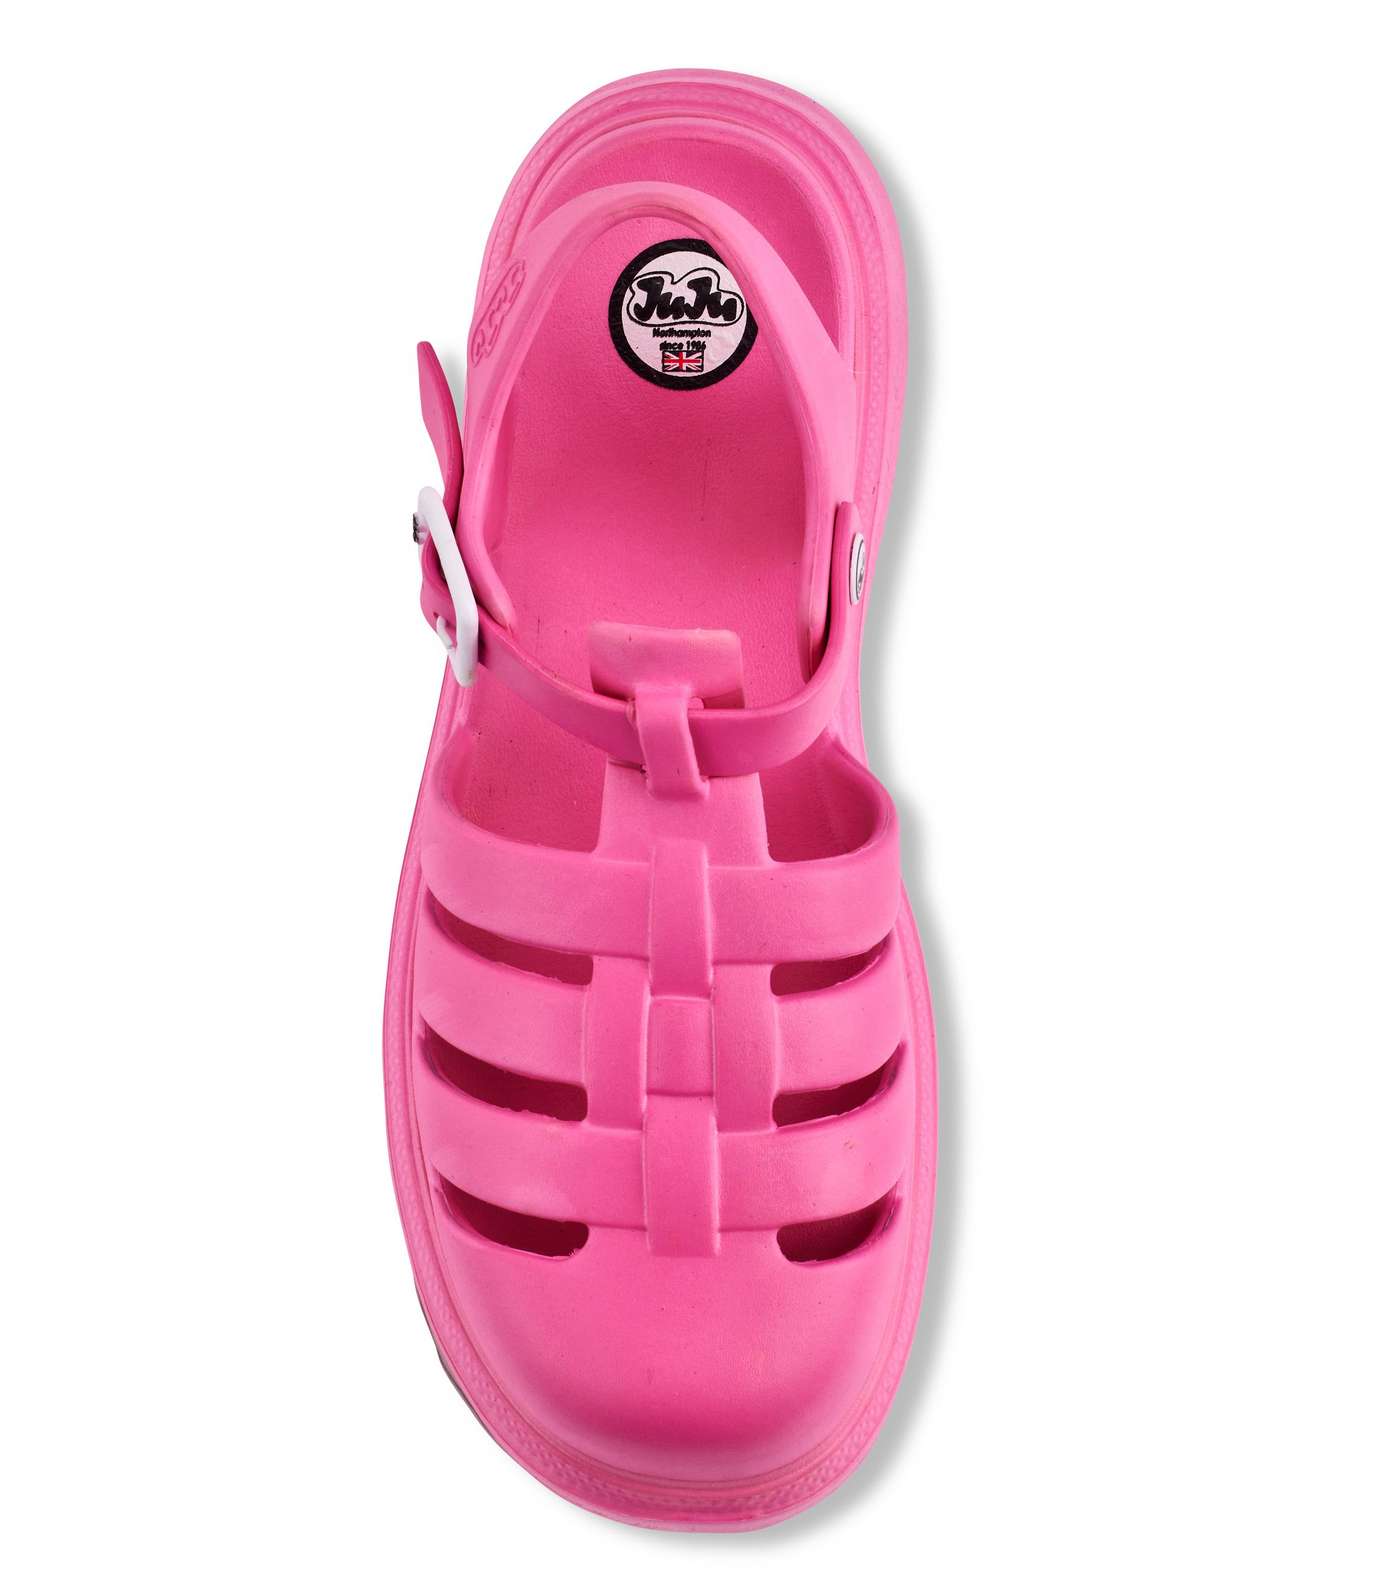 JUJU Pink Chunky Jelly Sandals Image 4